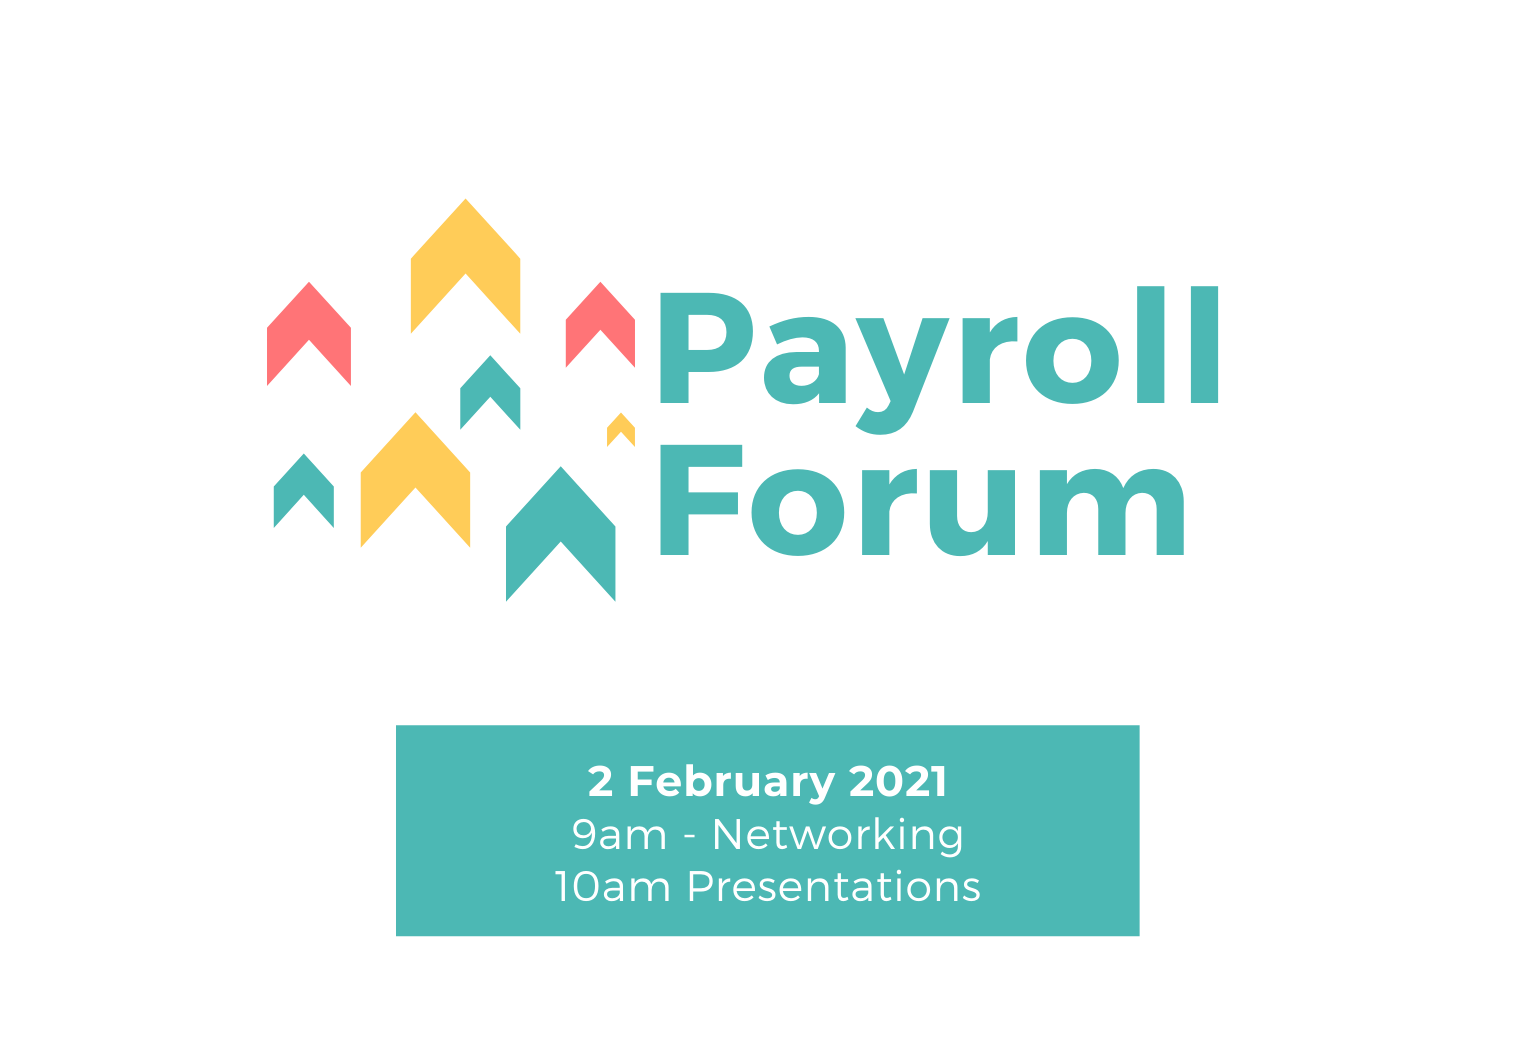 Payroll Forum - February 2021